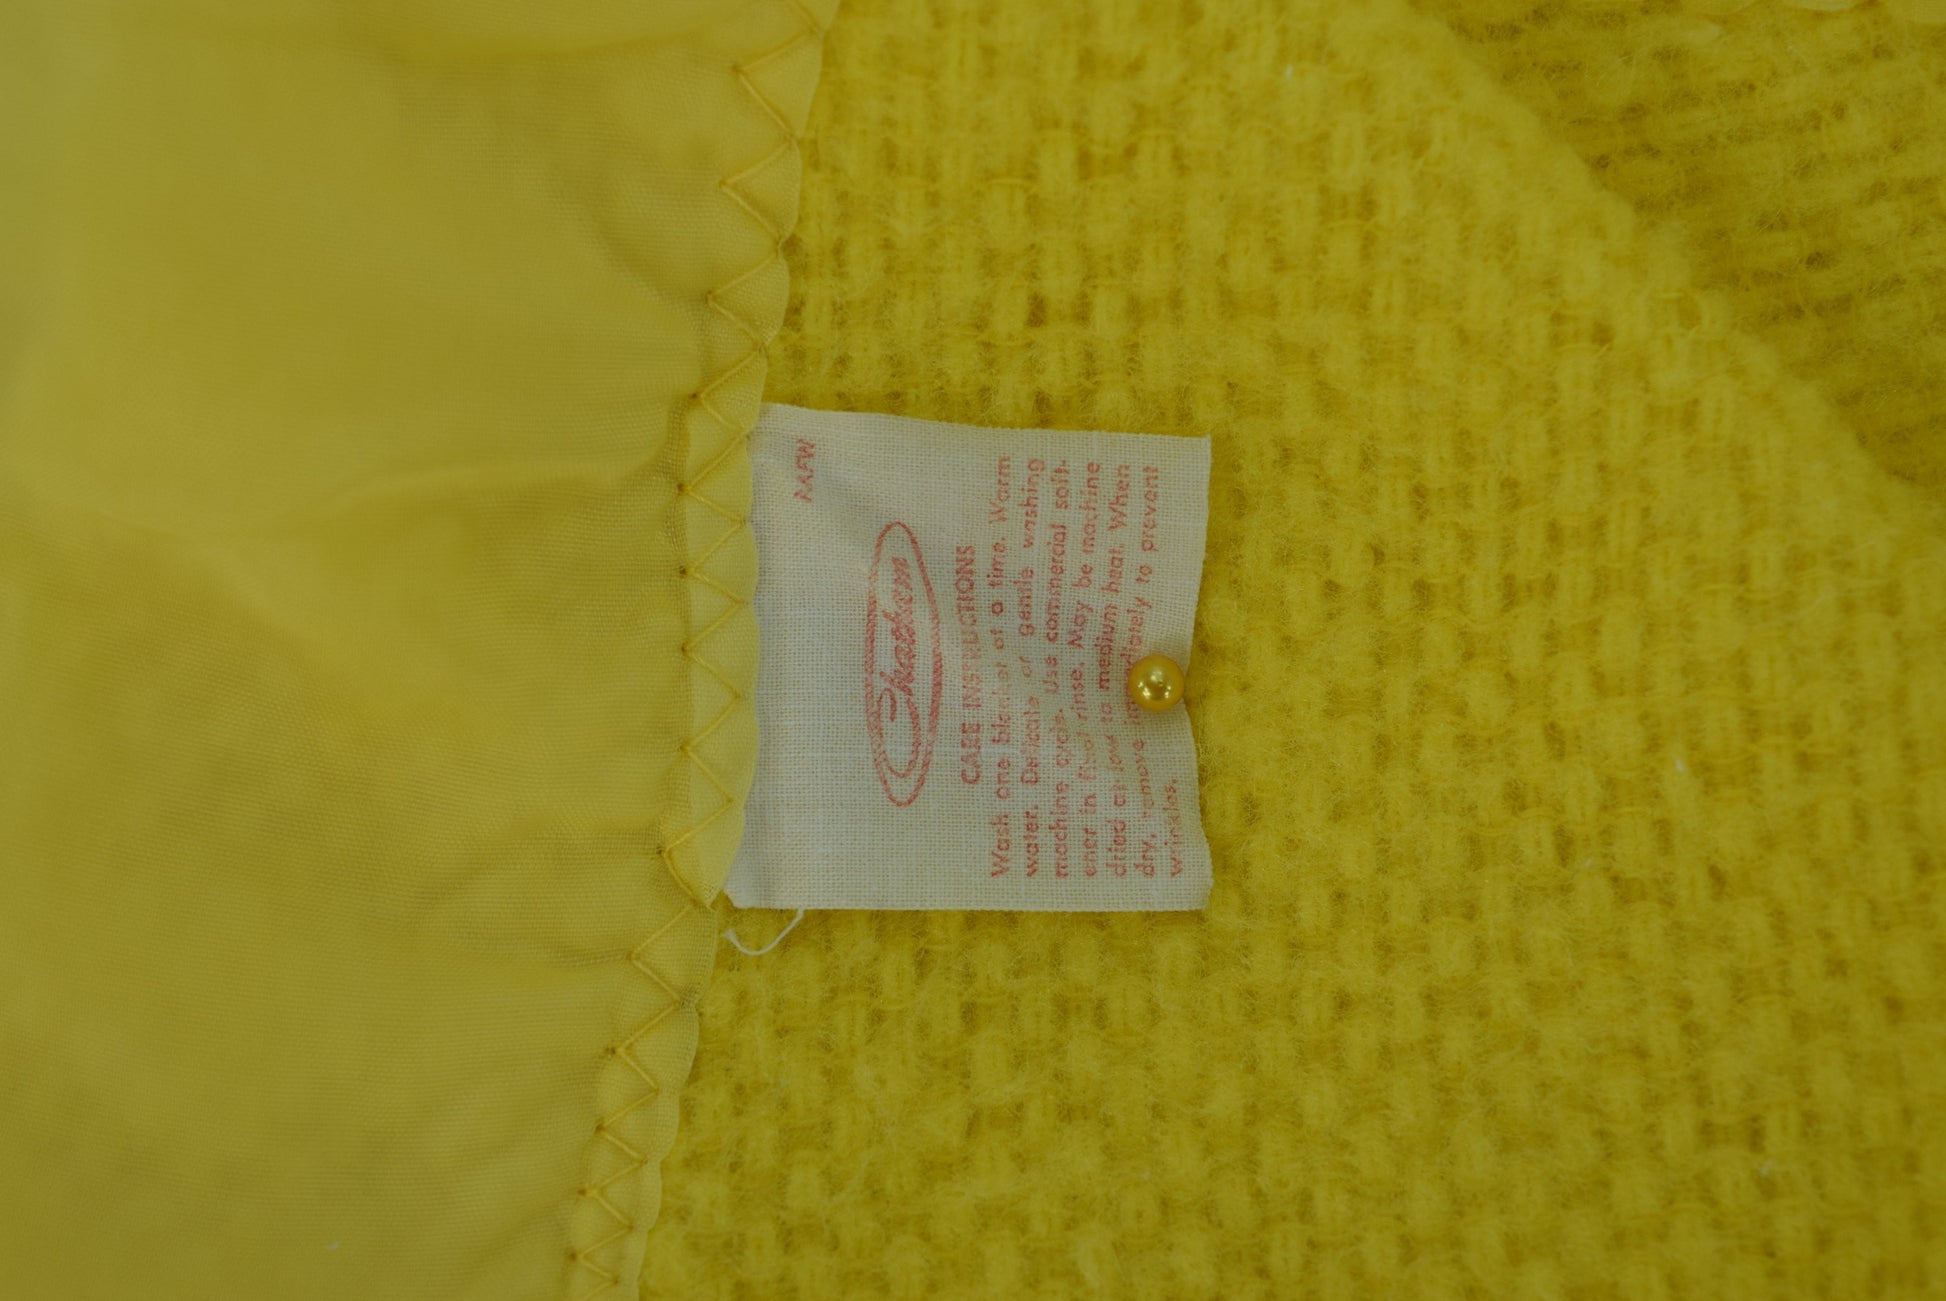 Acrylic Thermal Blanket for sale Lemon Yellow with Embroidered Binding Retro Bedding all season